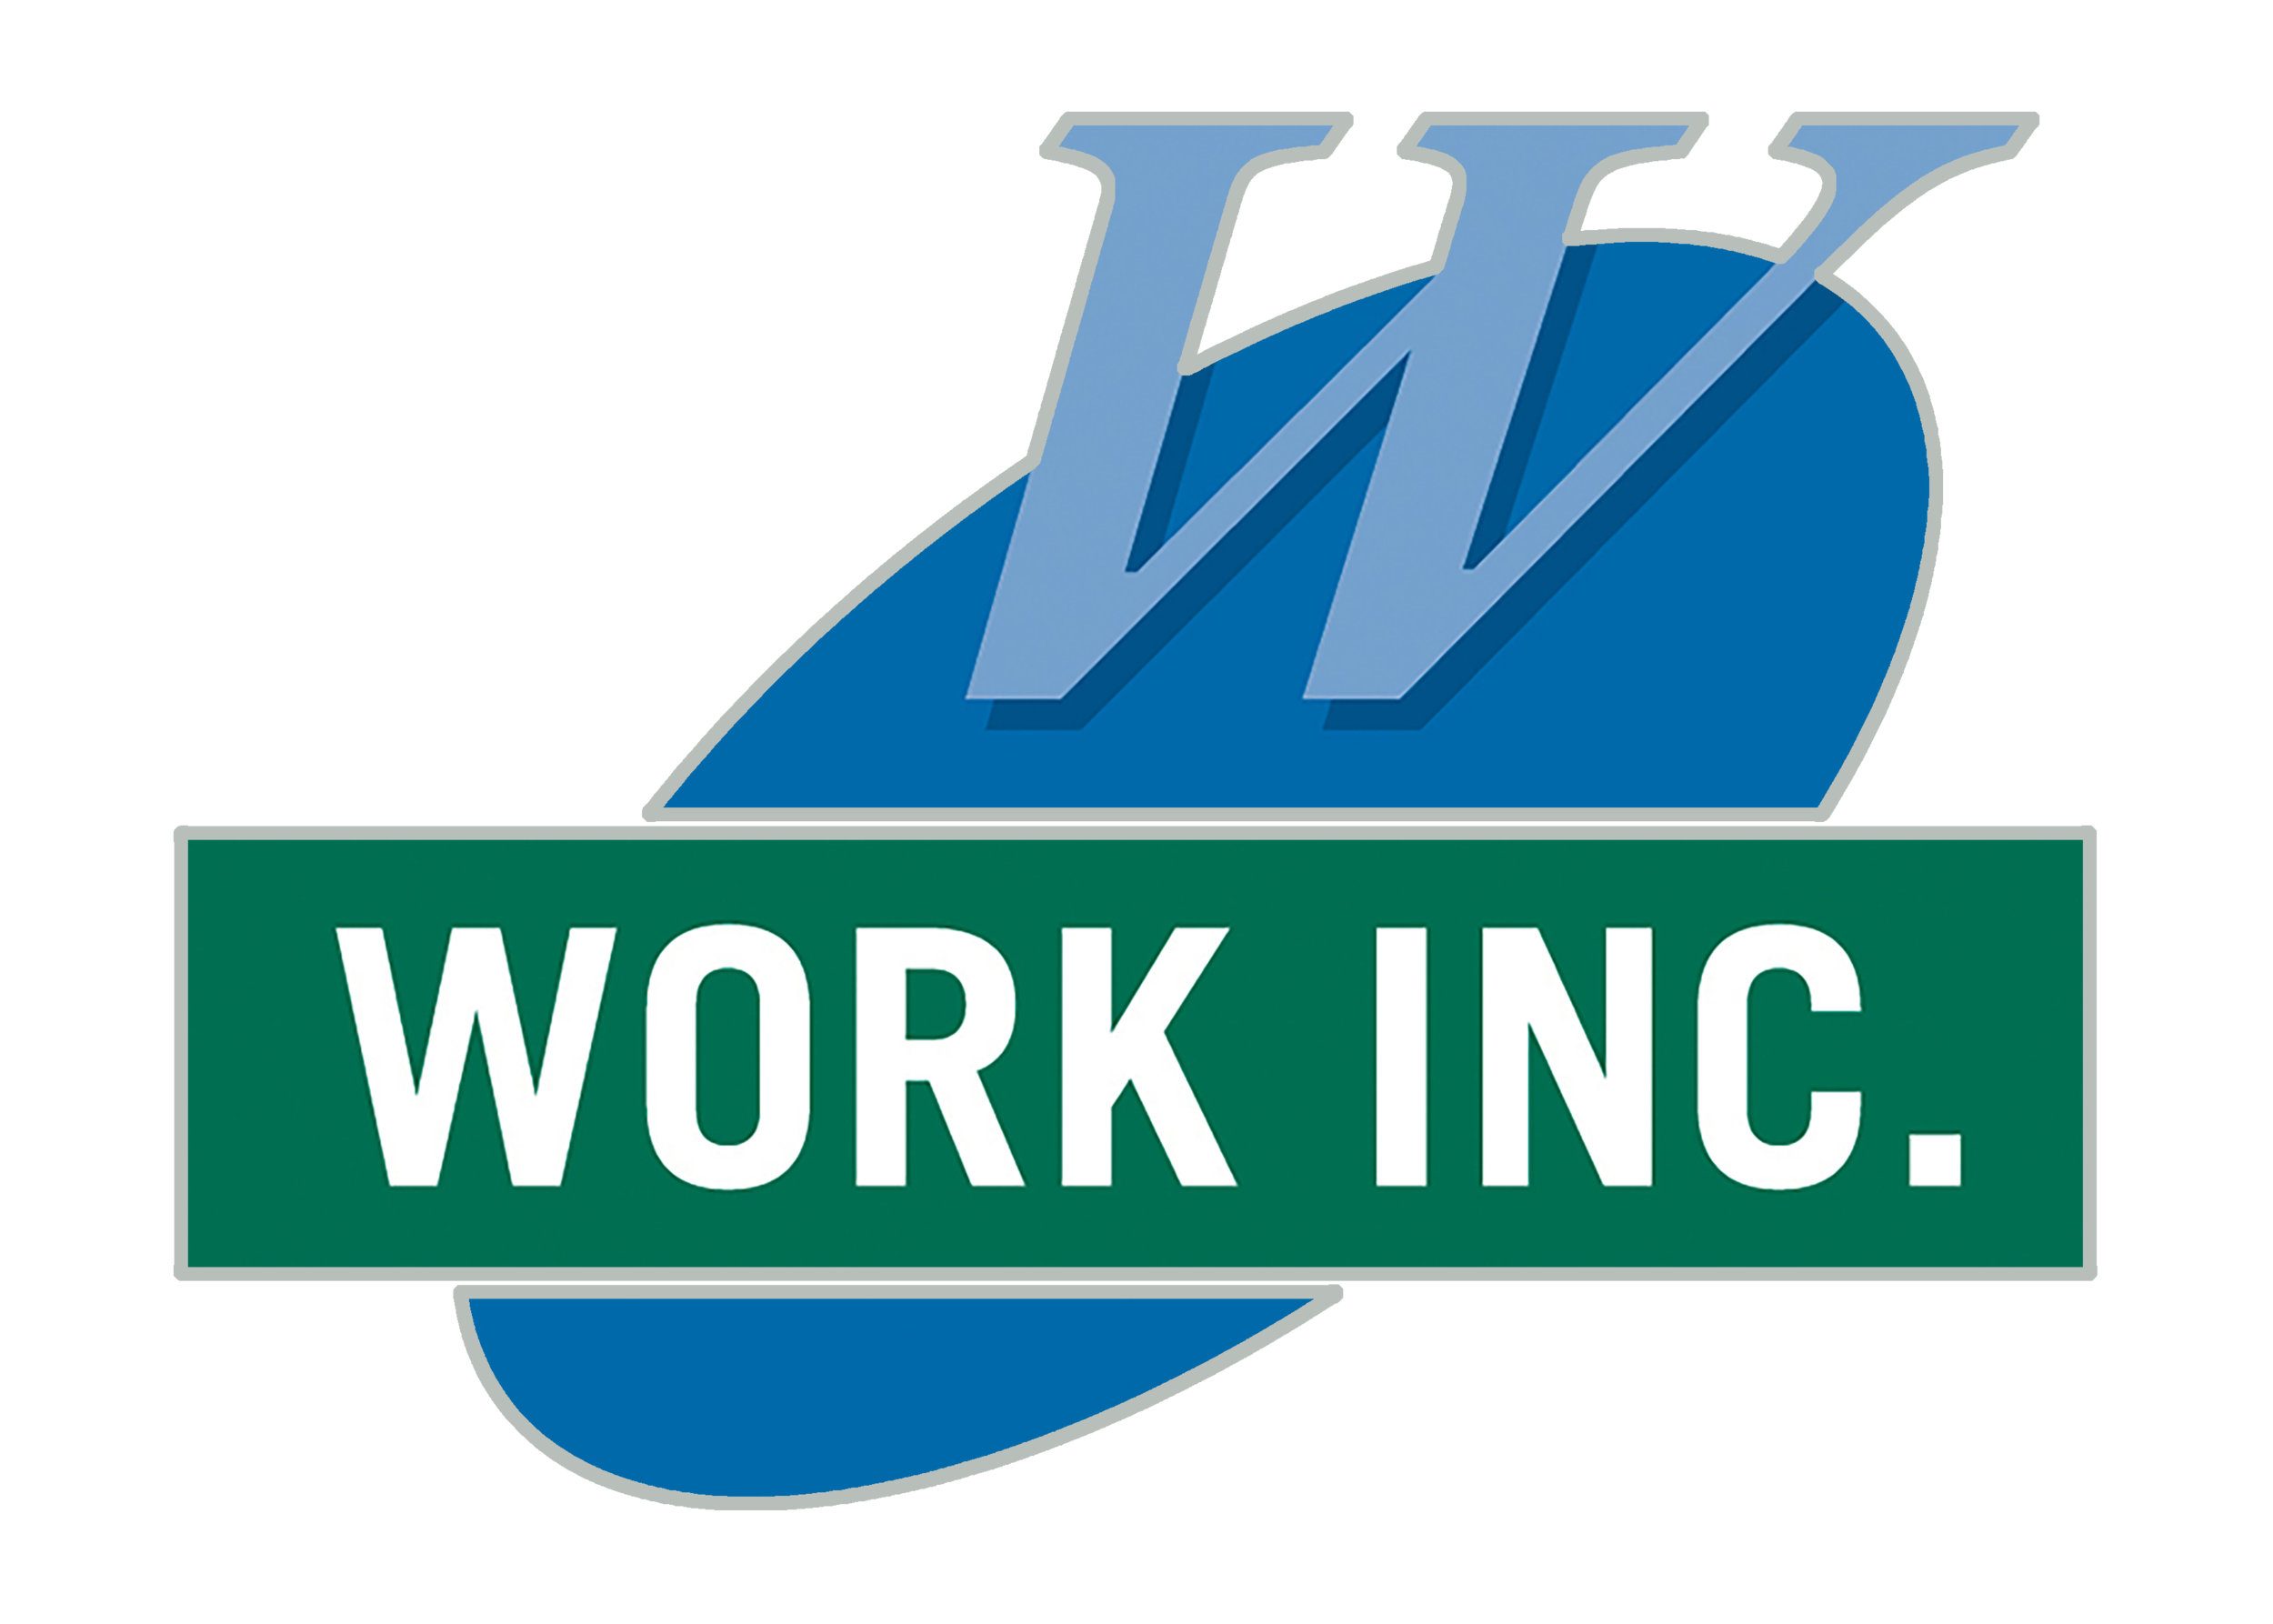 WORK Inc.